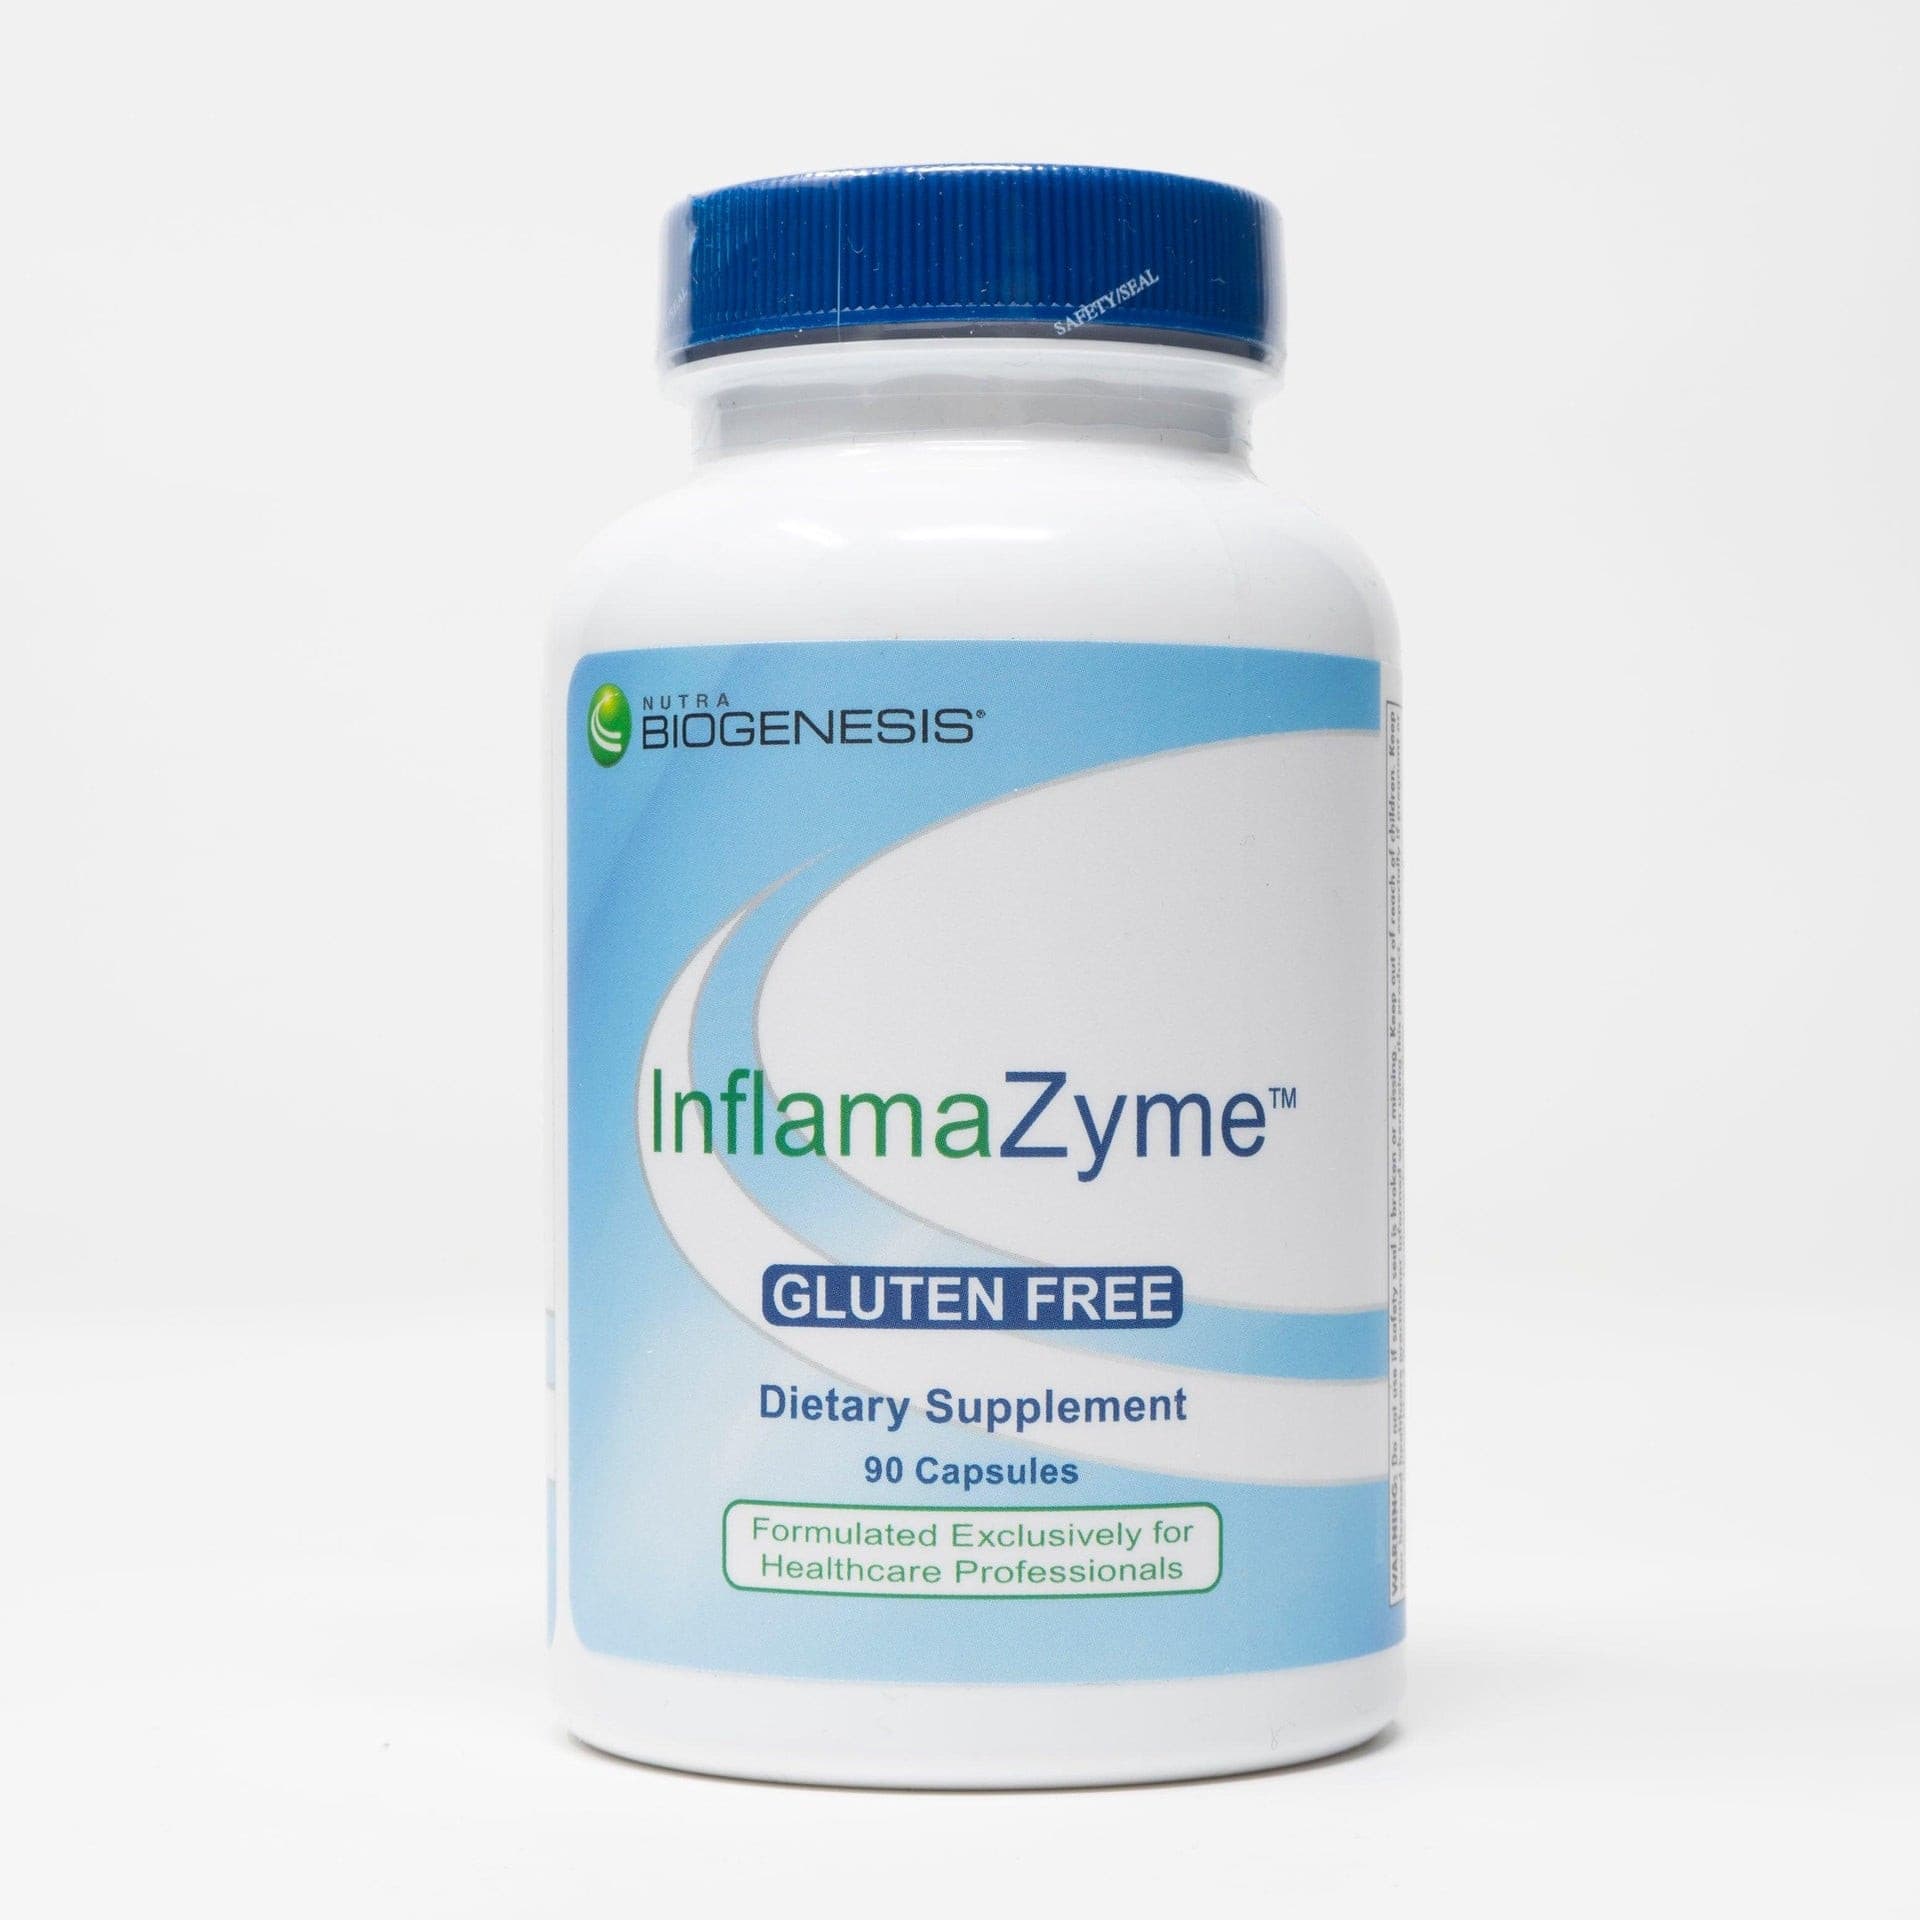 InflamaZyme.